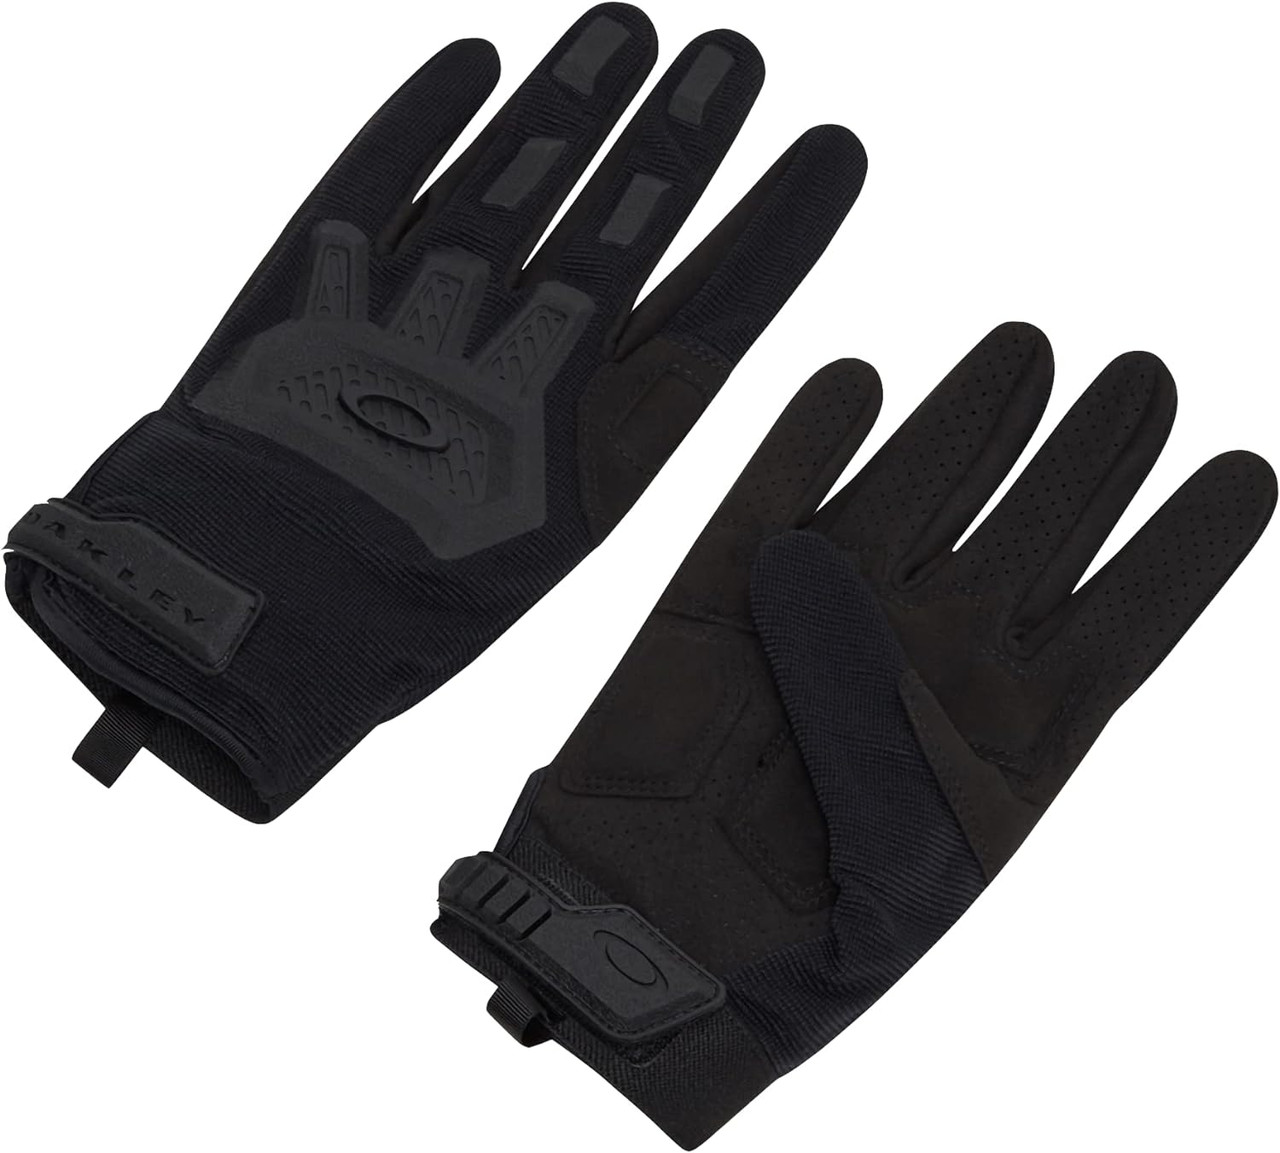 Oakley Men's Flexion 2.0 Gloves W/ TPR & Padded/Ventilated Palm Black XXL